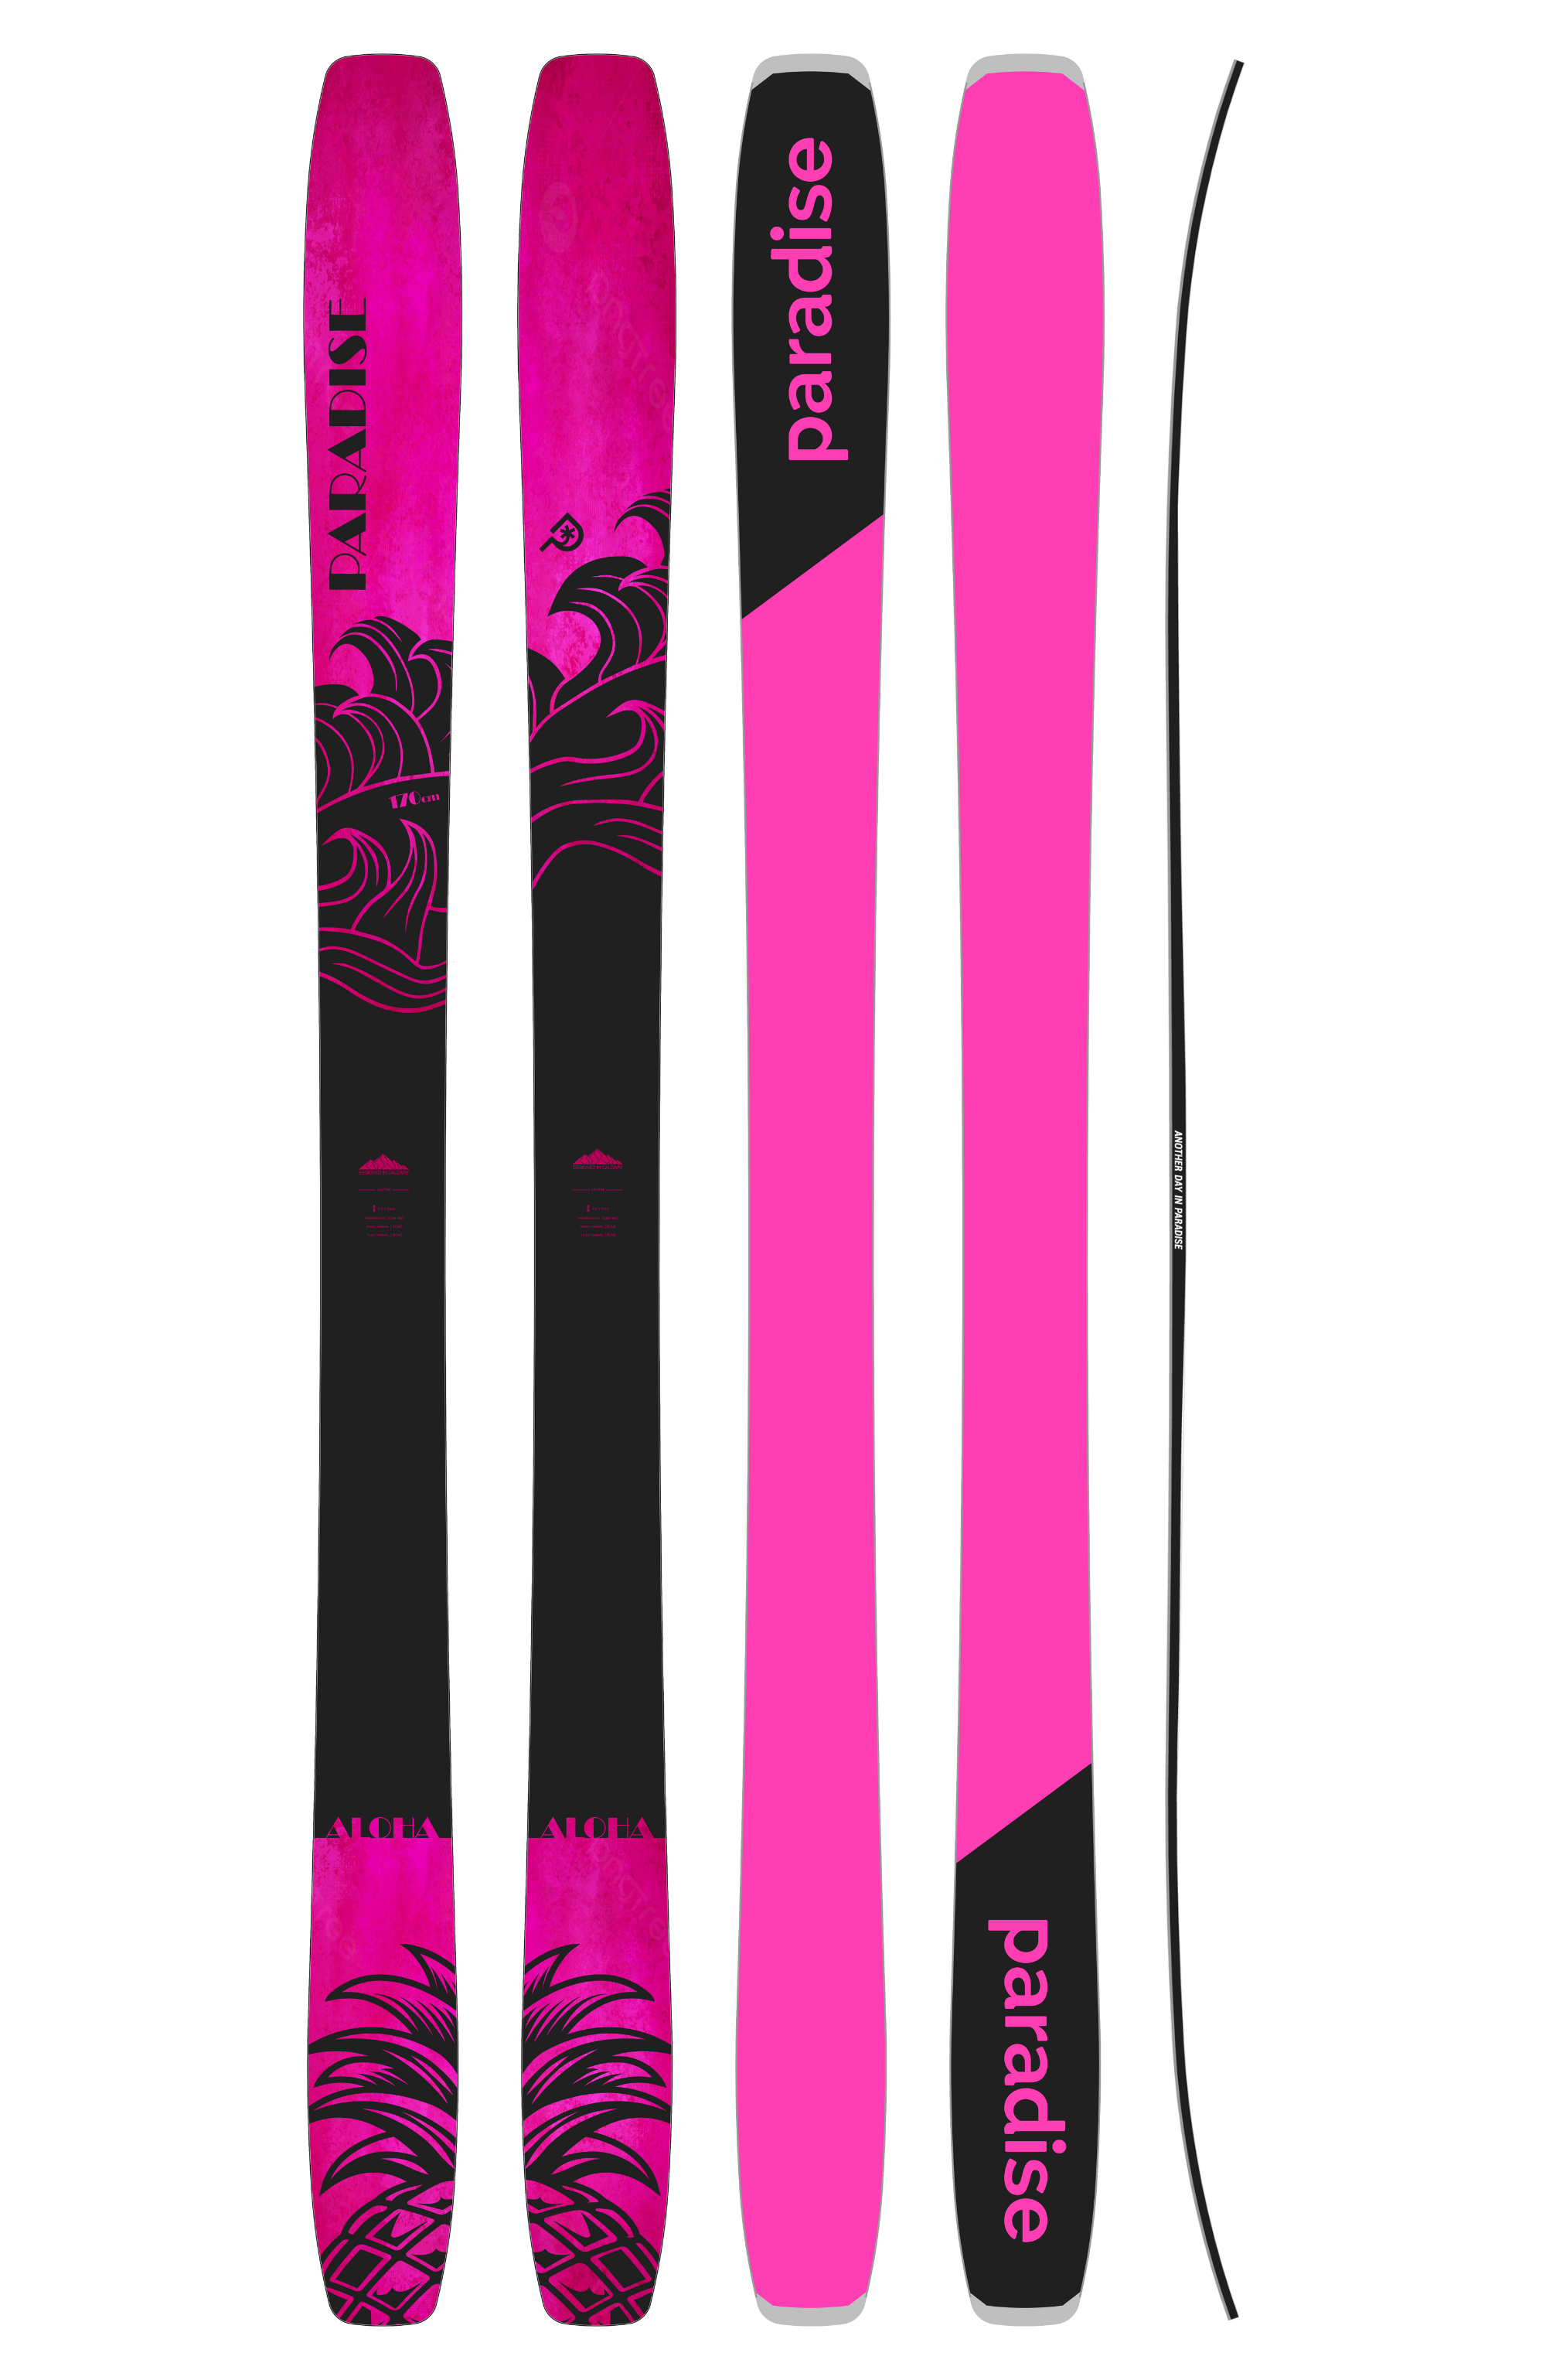 Paradise Skis - Canada's Premier Ski and Snowboard Brand